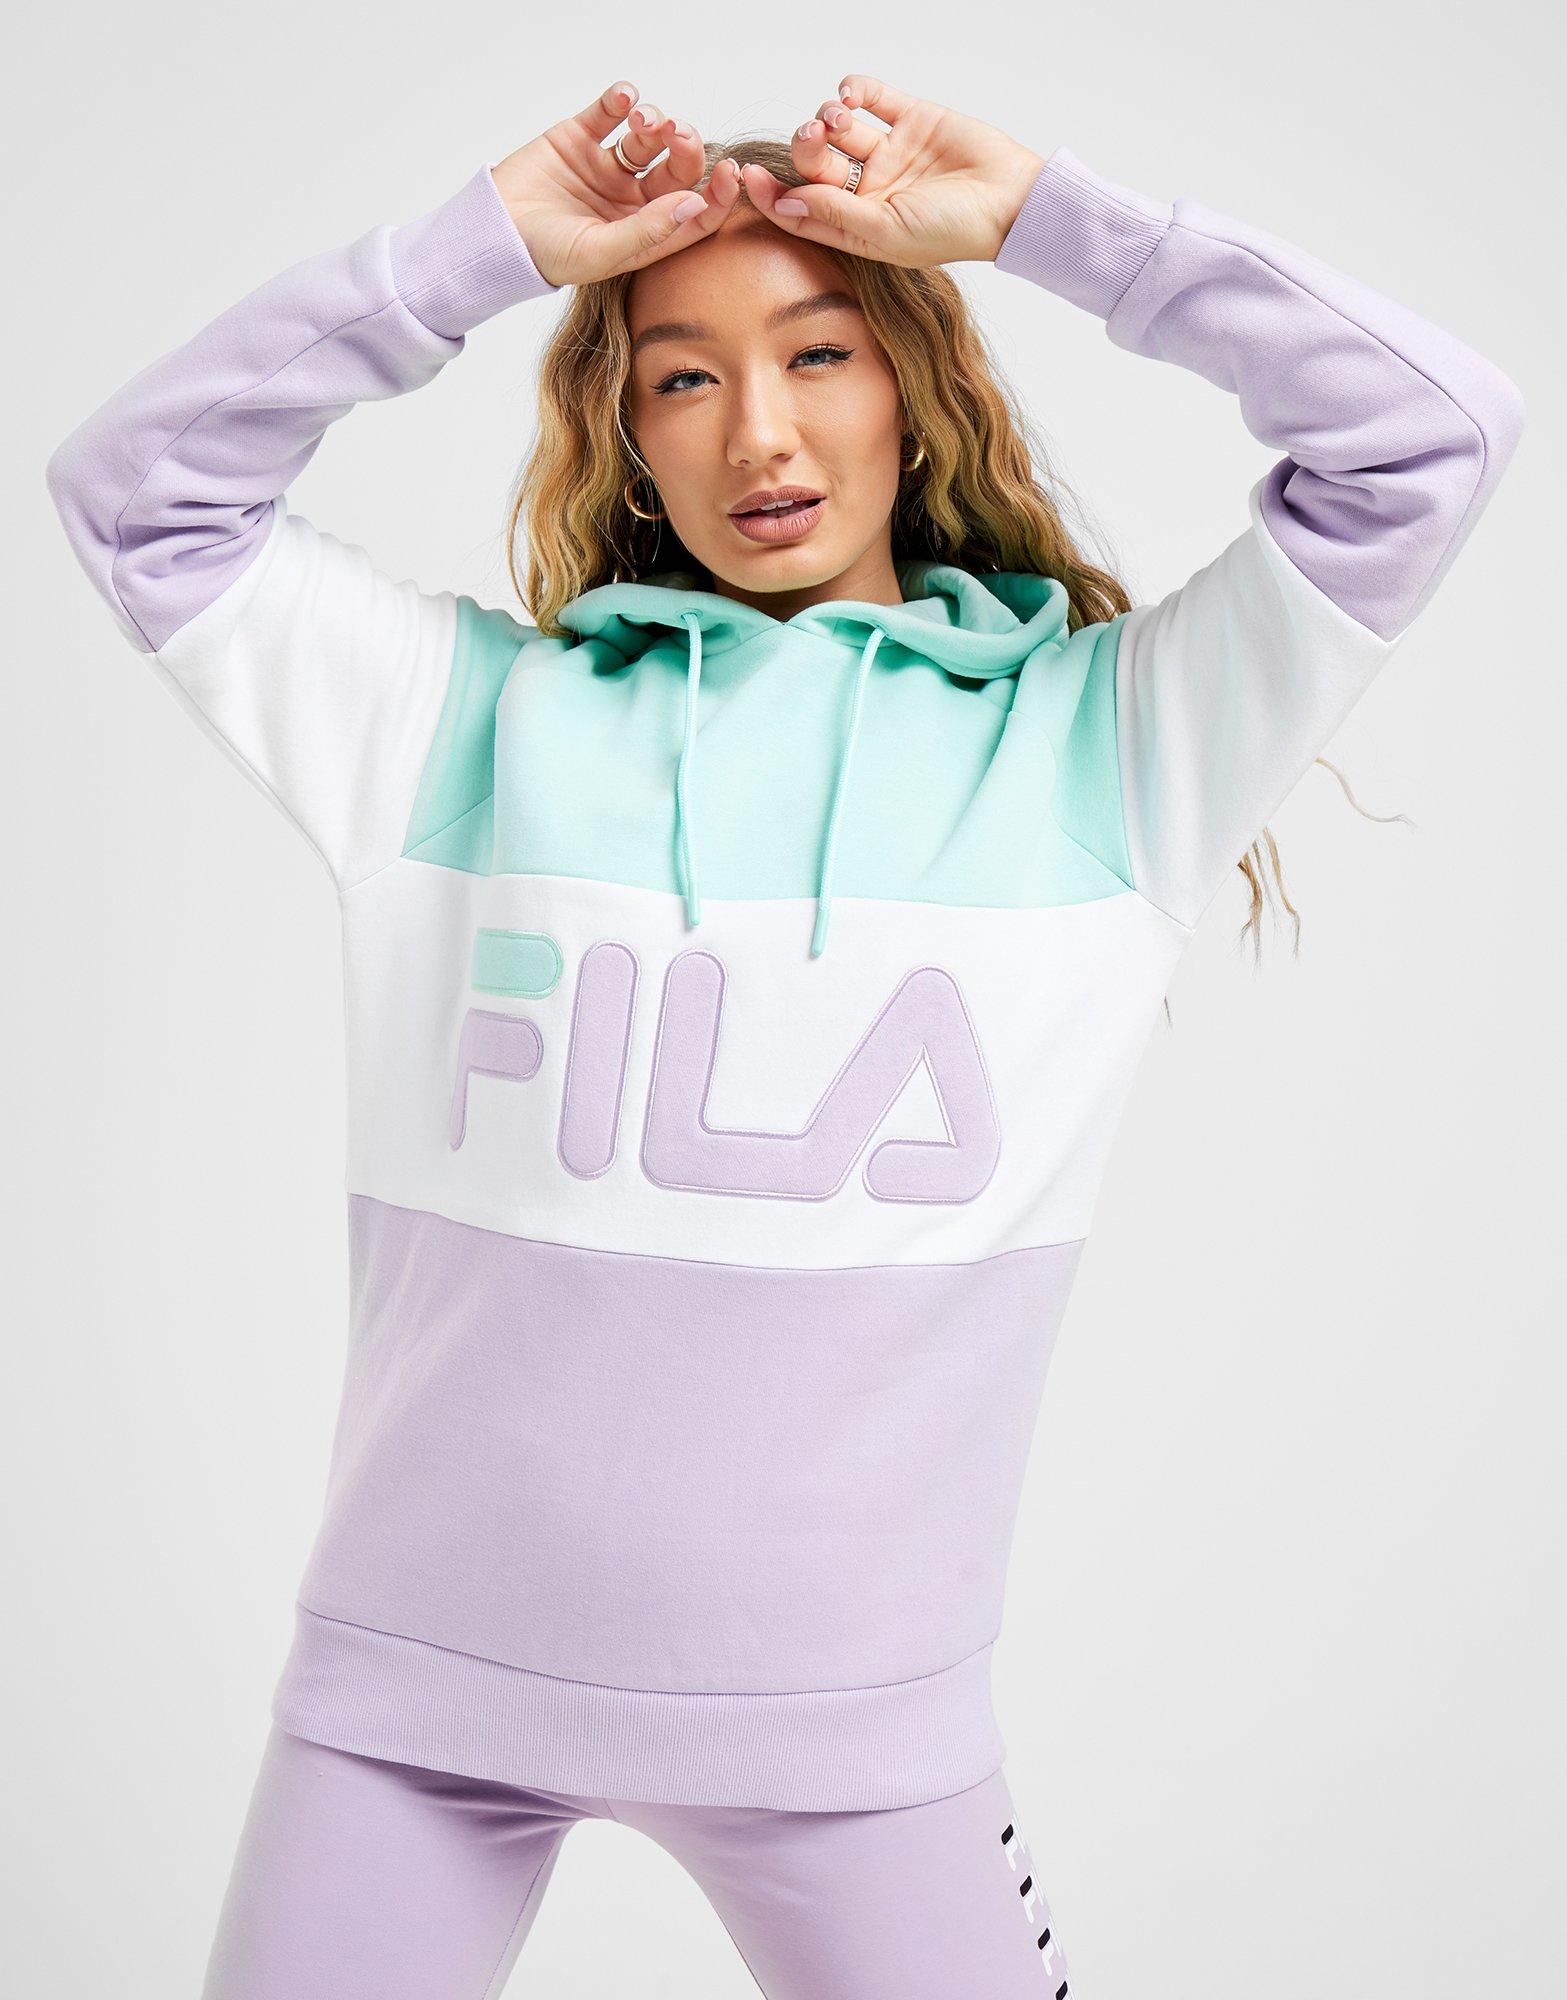 fila colour block sweatshirt